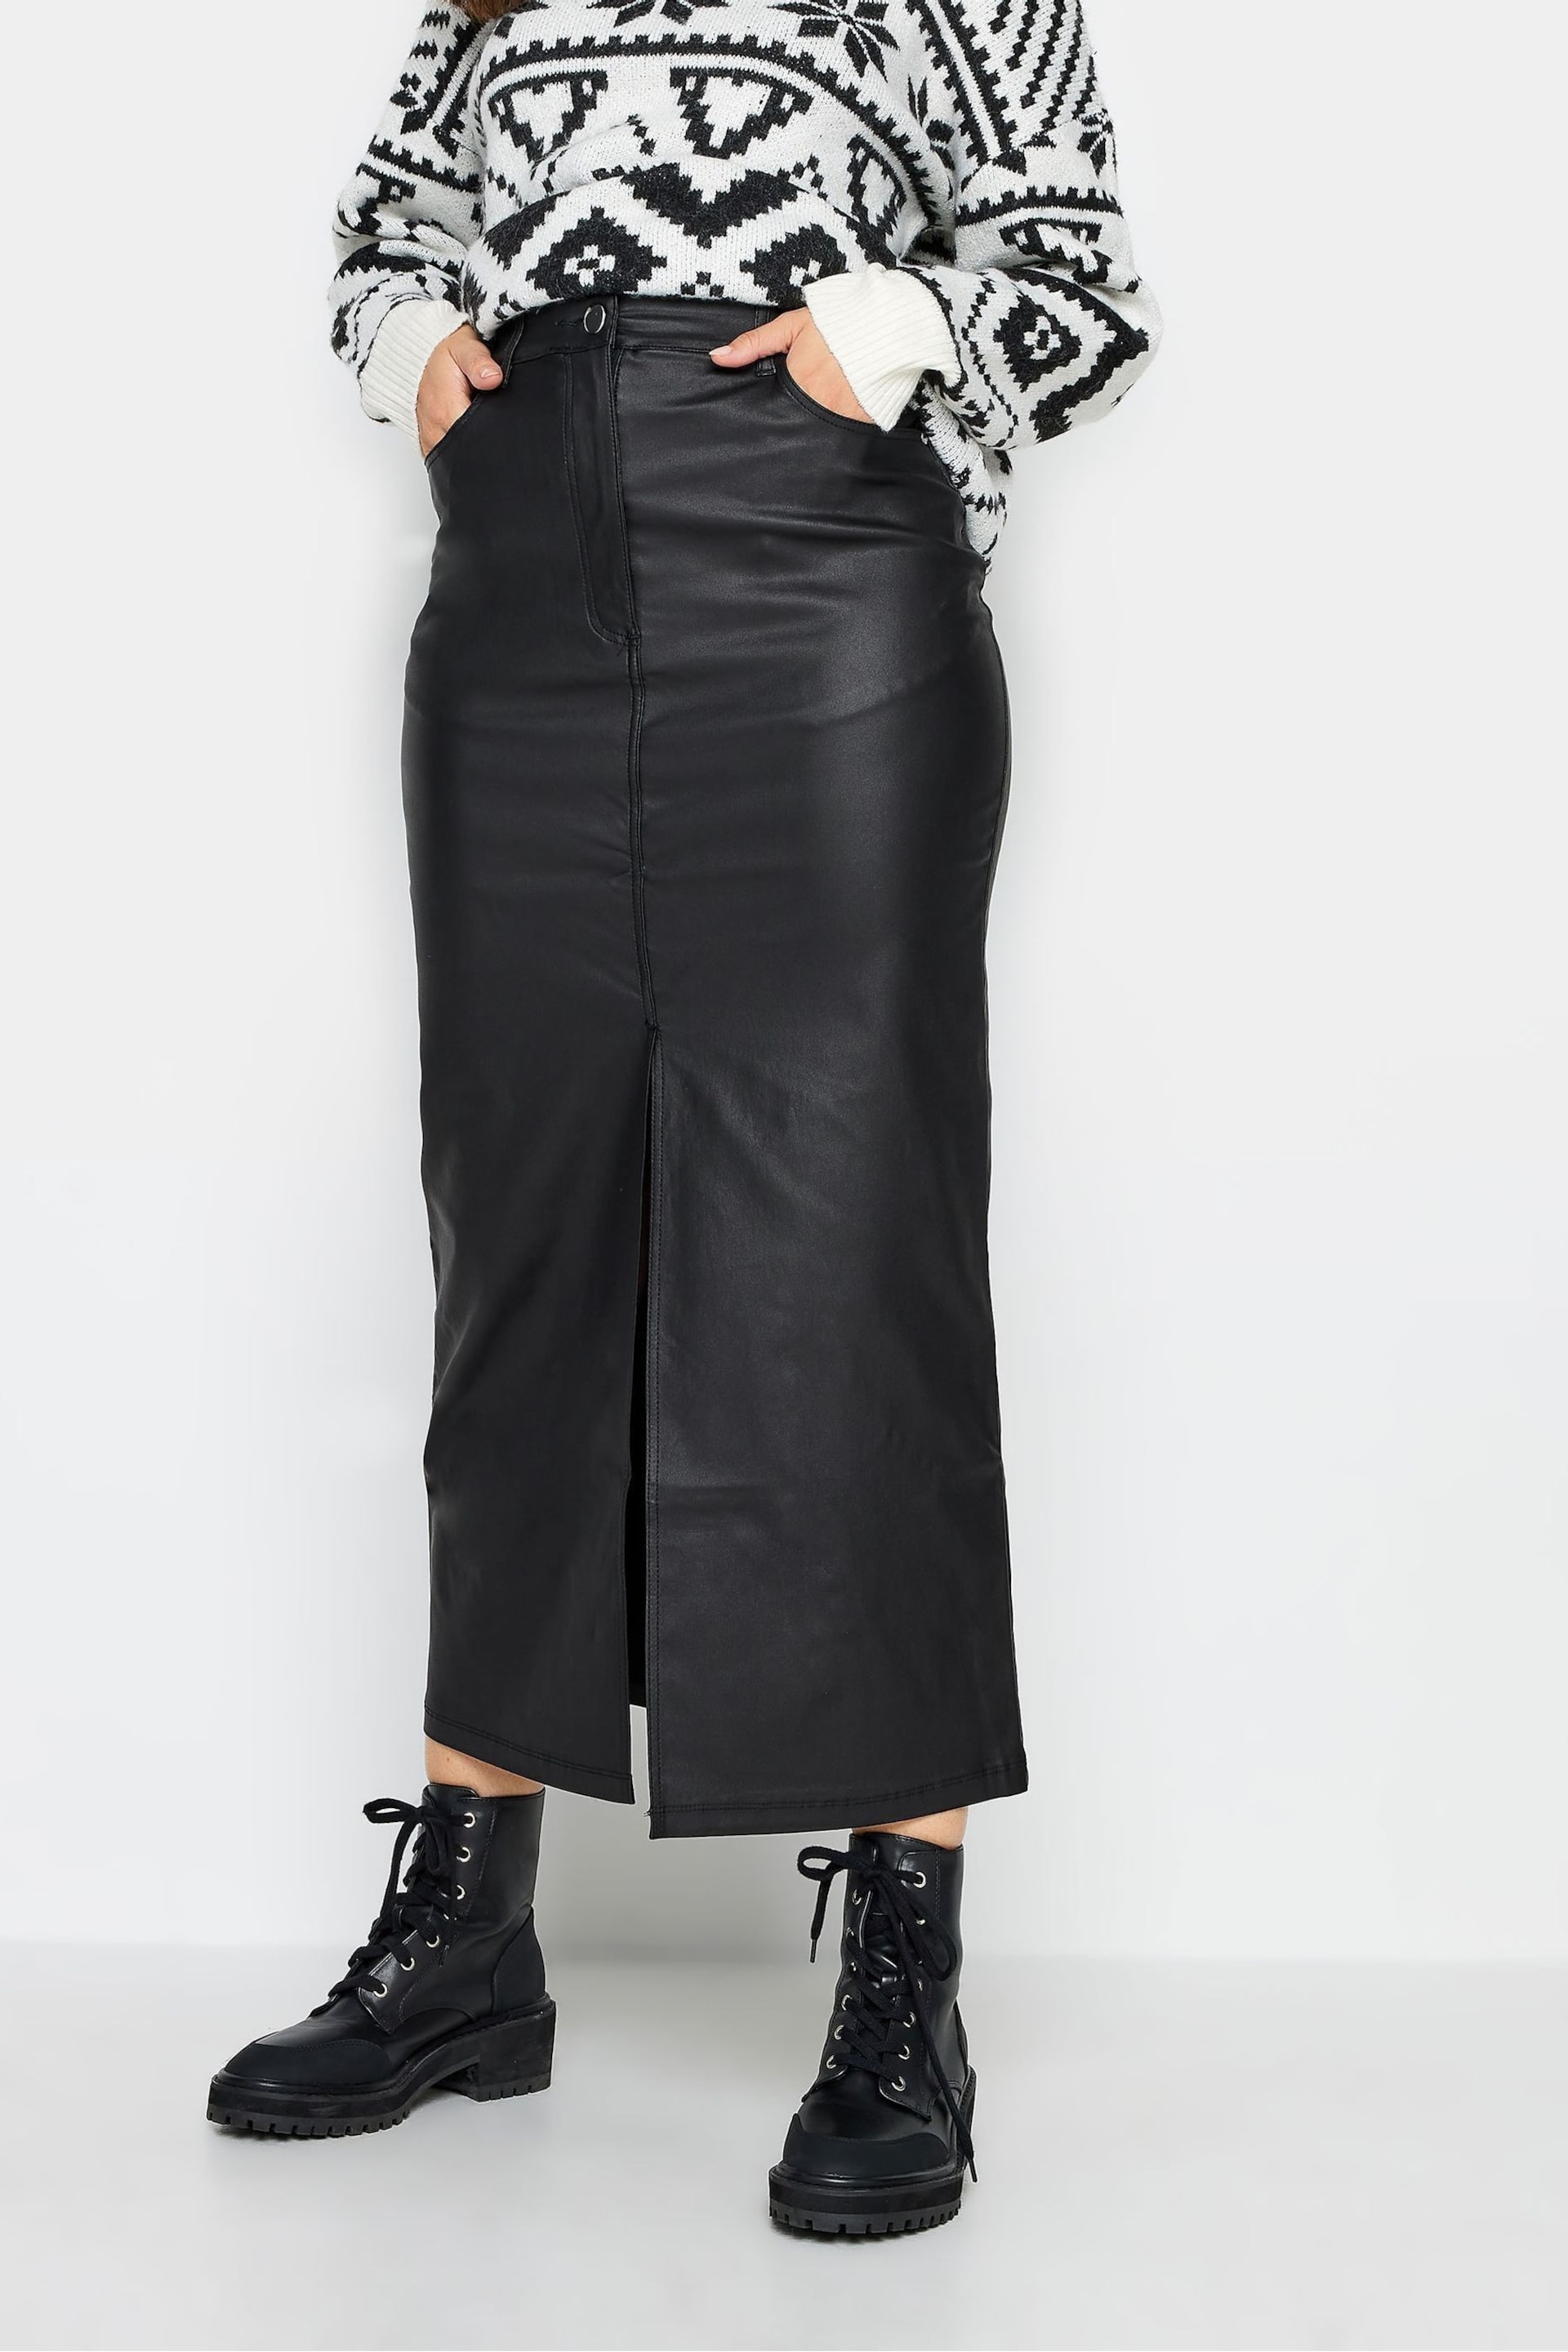 Long Tall Sally Black Coated Skirt - Image 1 of 4